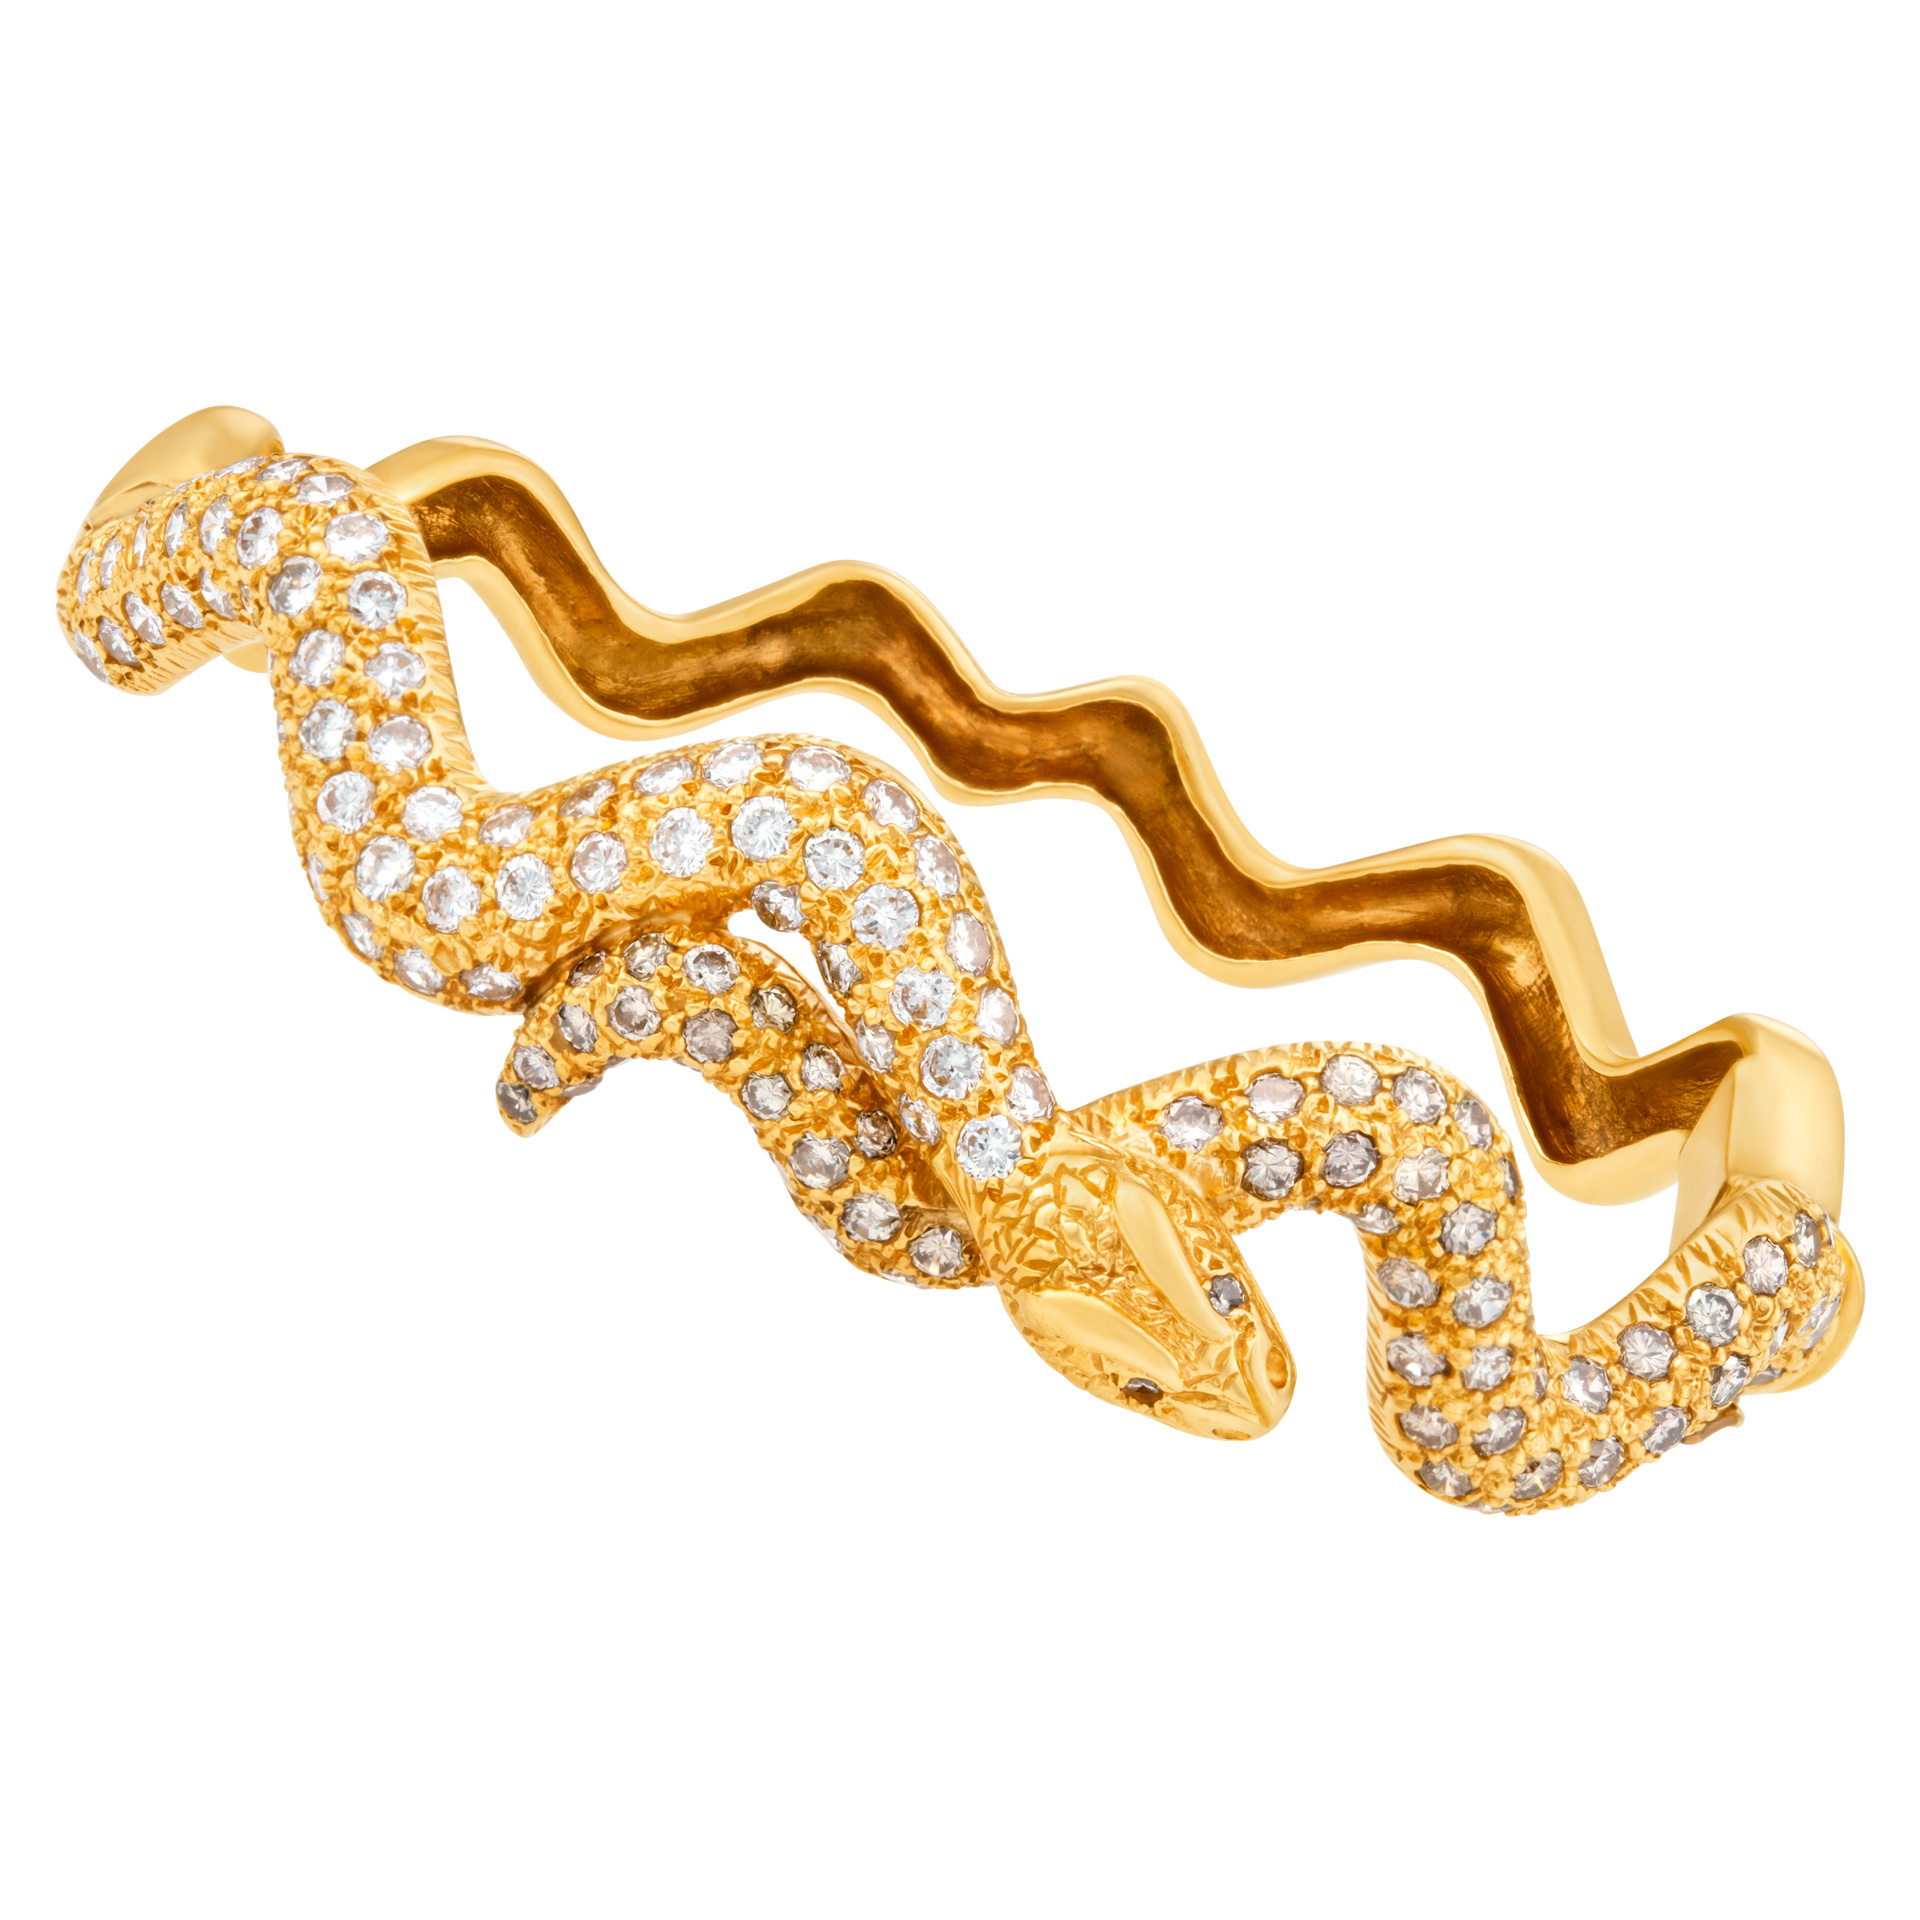 Sazingg 18k serpent bangle with app. 3 carats in diamonds image 1